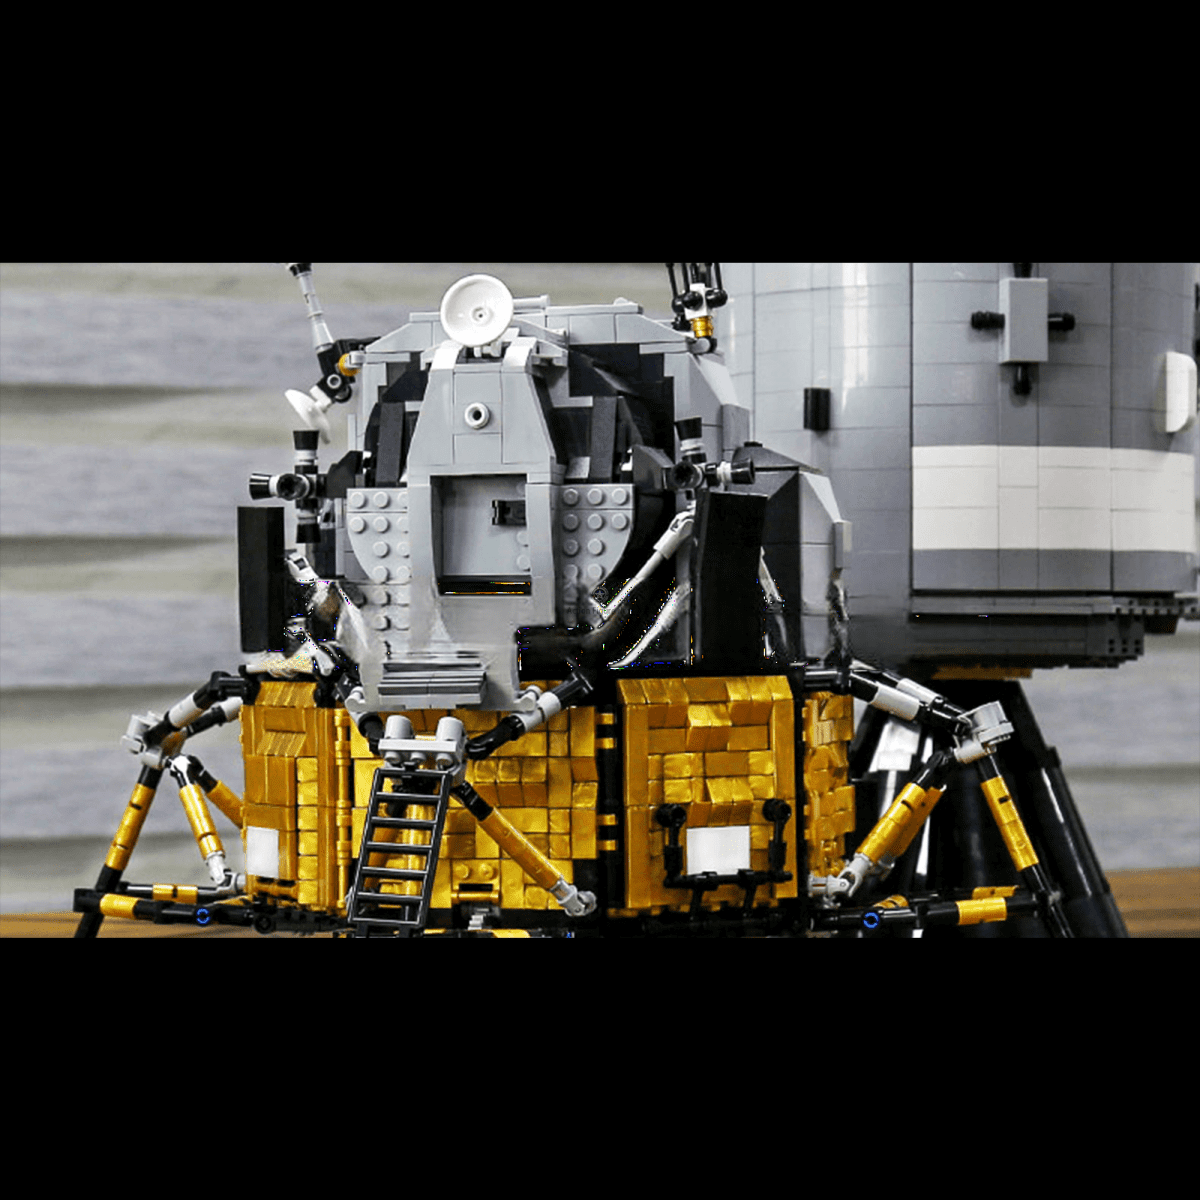 ActionFigureNow 21006 Apollo 11 Spacecraft Lego-Compatible Set | 7,106-Piece Galactic Building Kit